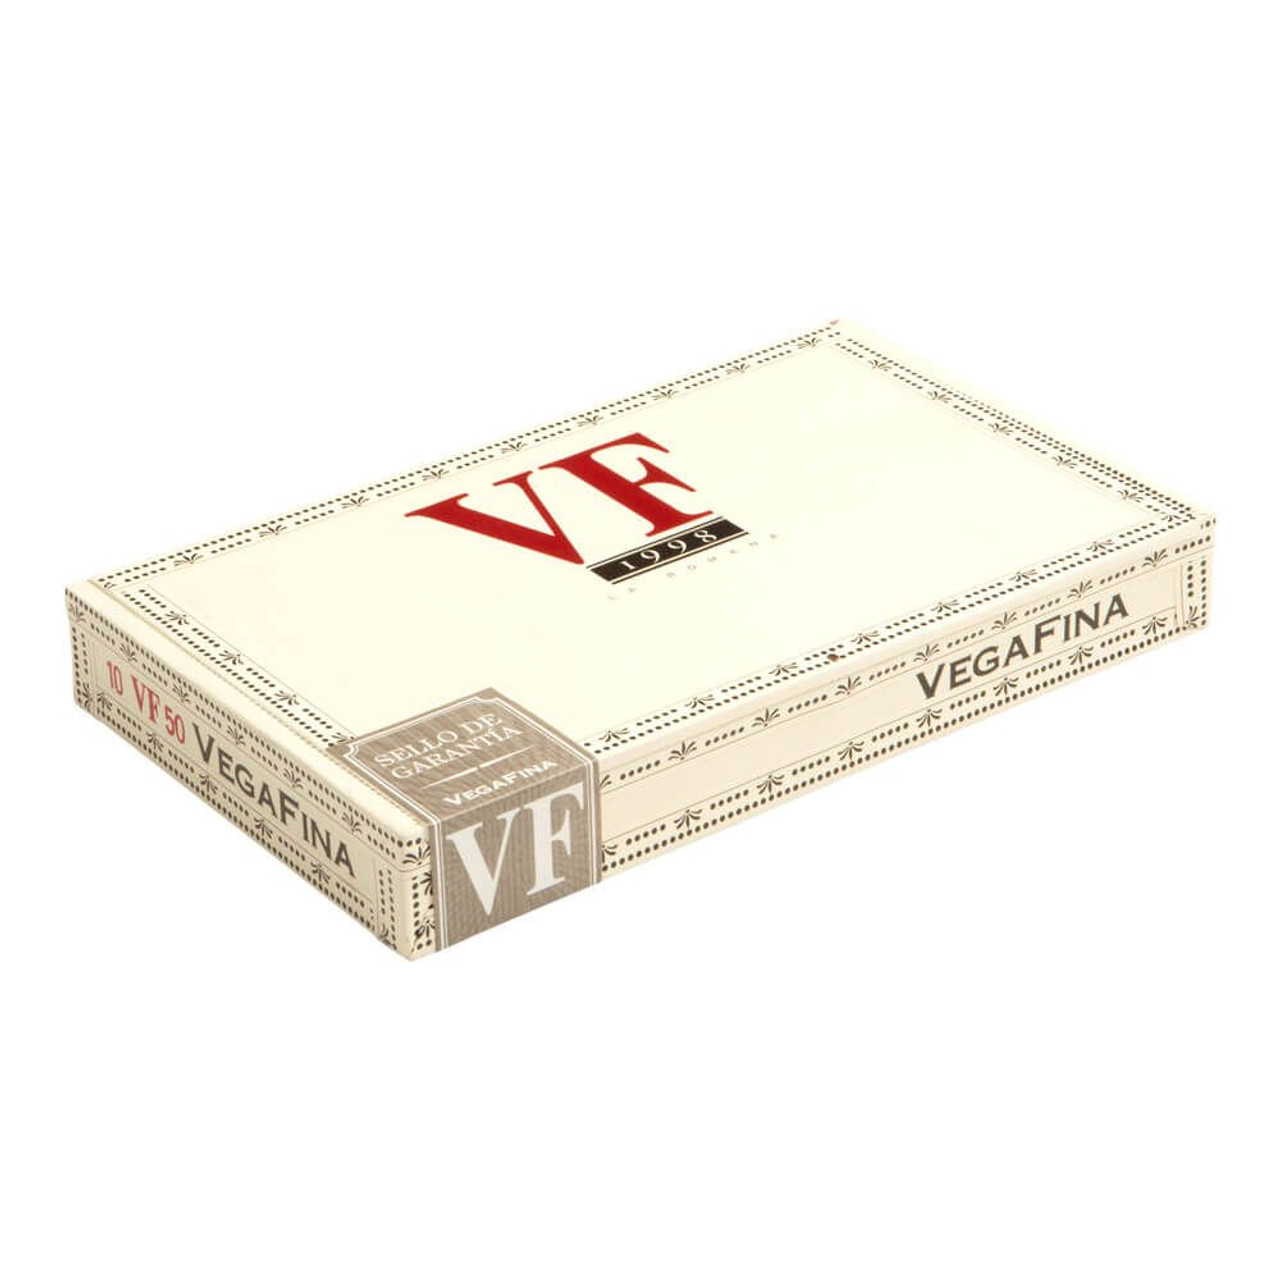 VegaFina 1998 VF52 Cigars - 5 x 52 (Box of 10) *Box